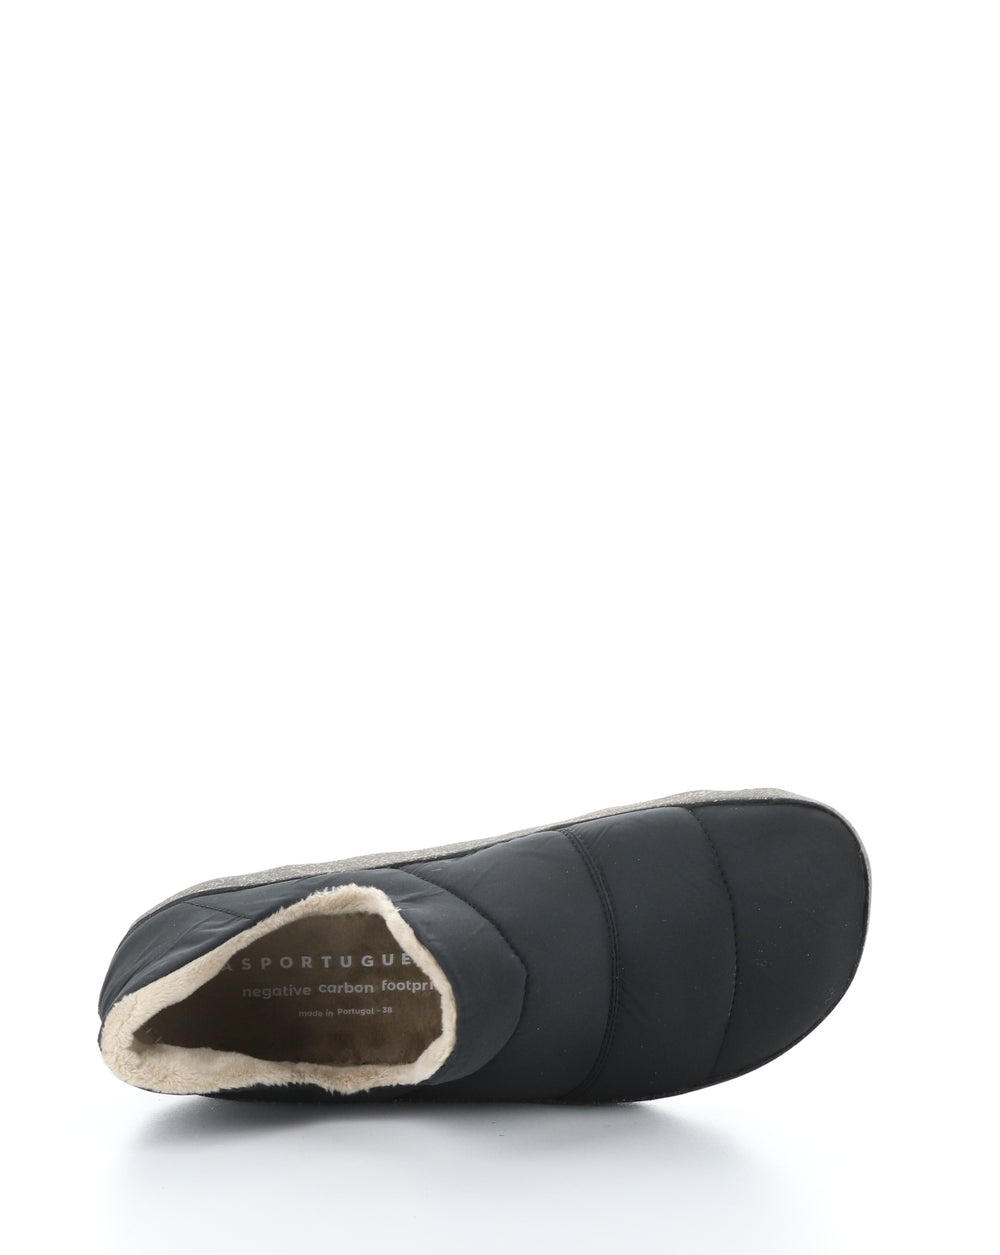 CRUS150ASPM Black Round Toe Shoes